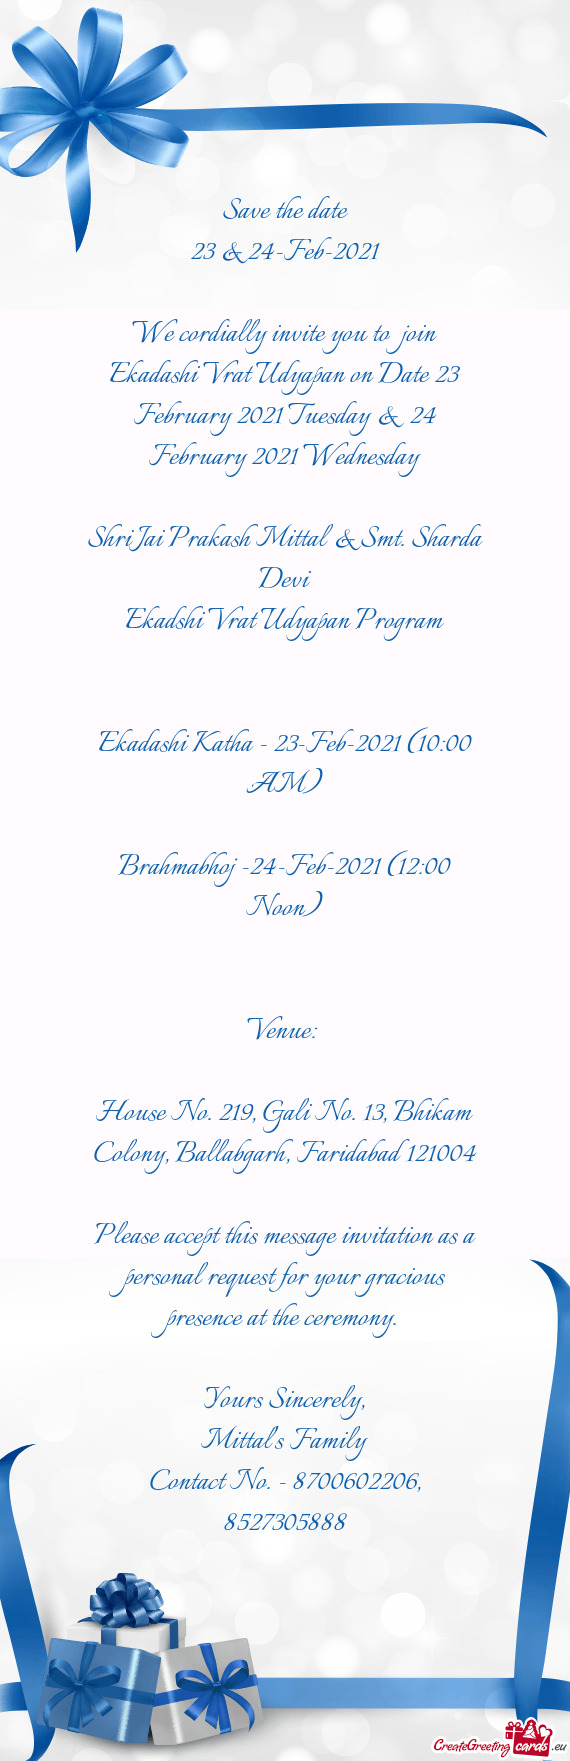 We cordially invite you to join Ekadashi Vrat Udyapan on Date 23 February 2021 Tuesday & 24 Februa